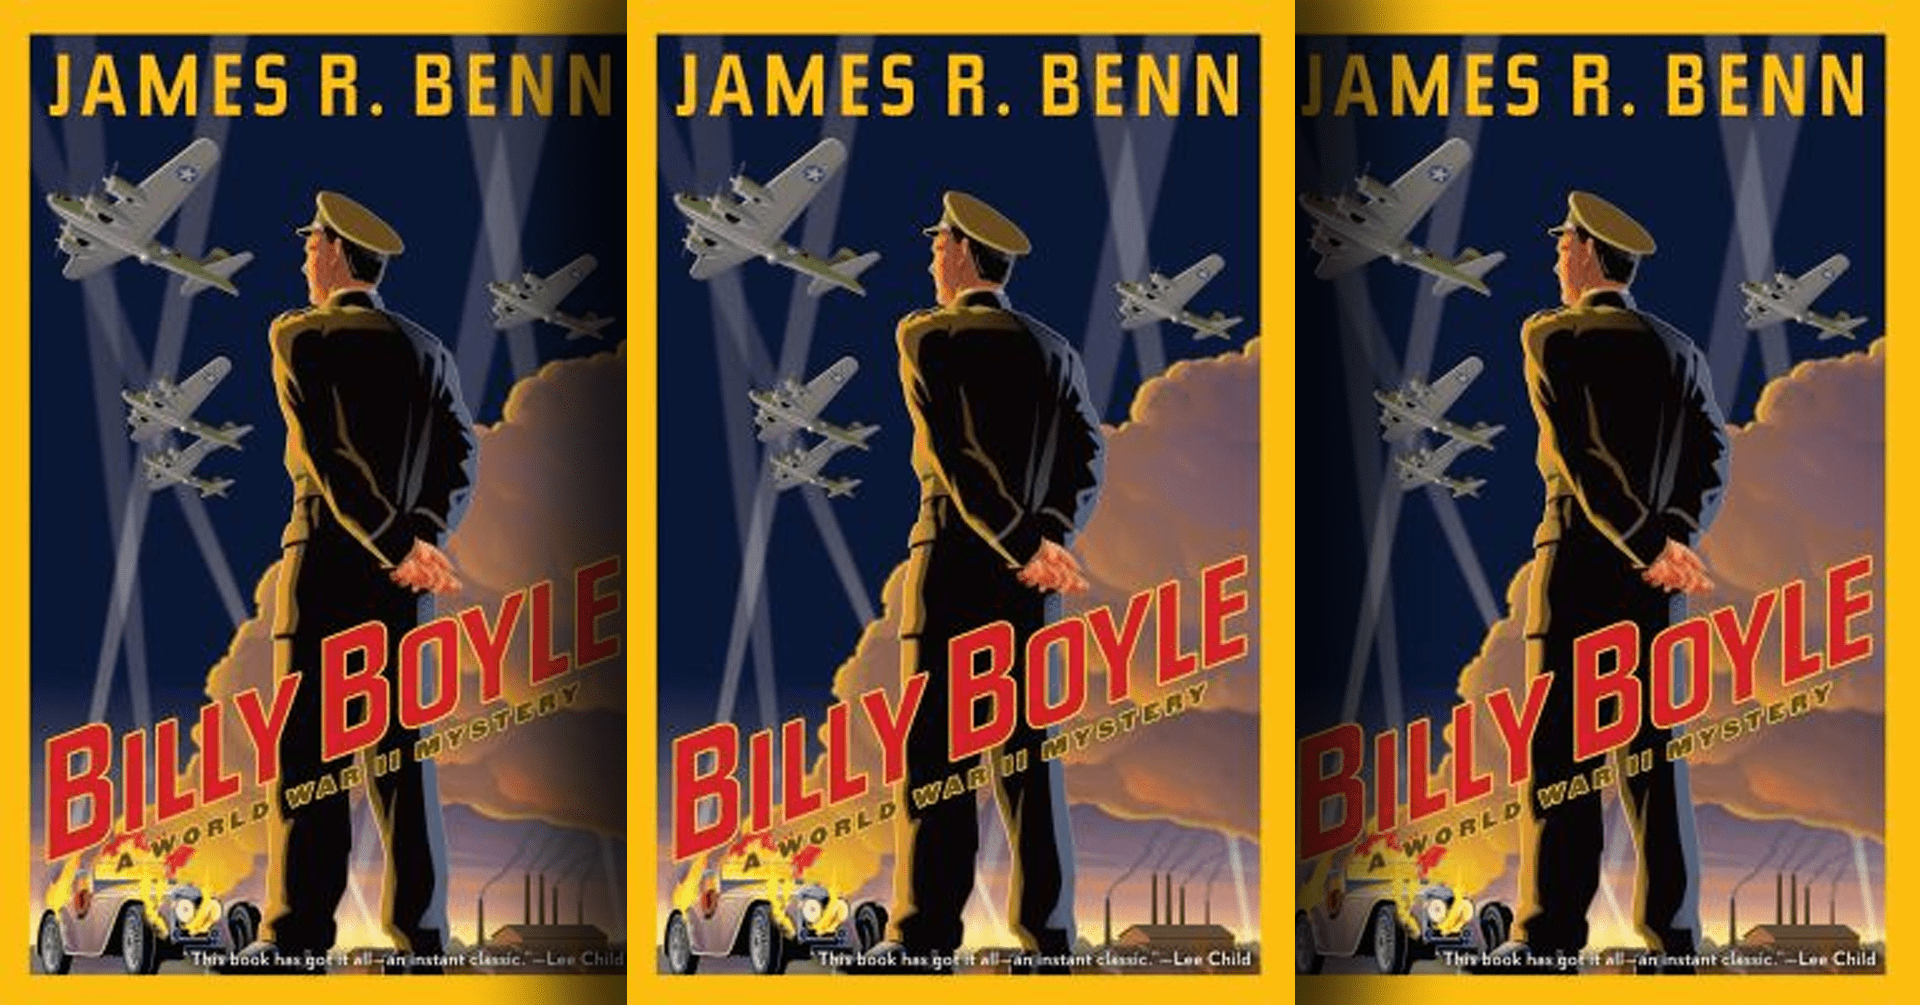 Book Cover: Billy Boyle by James R. Benn